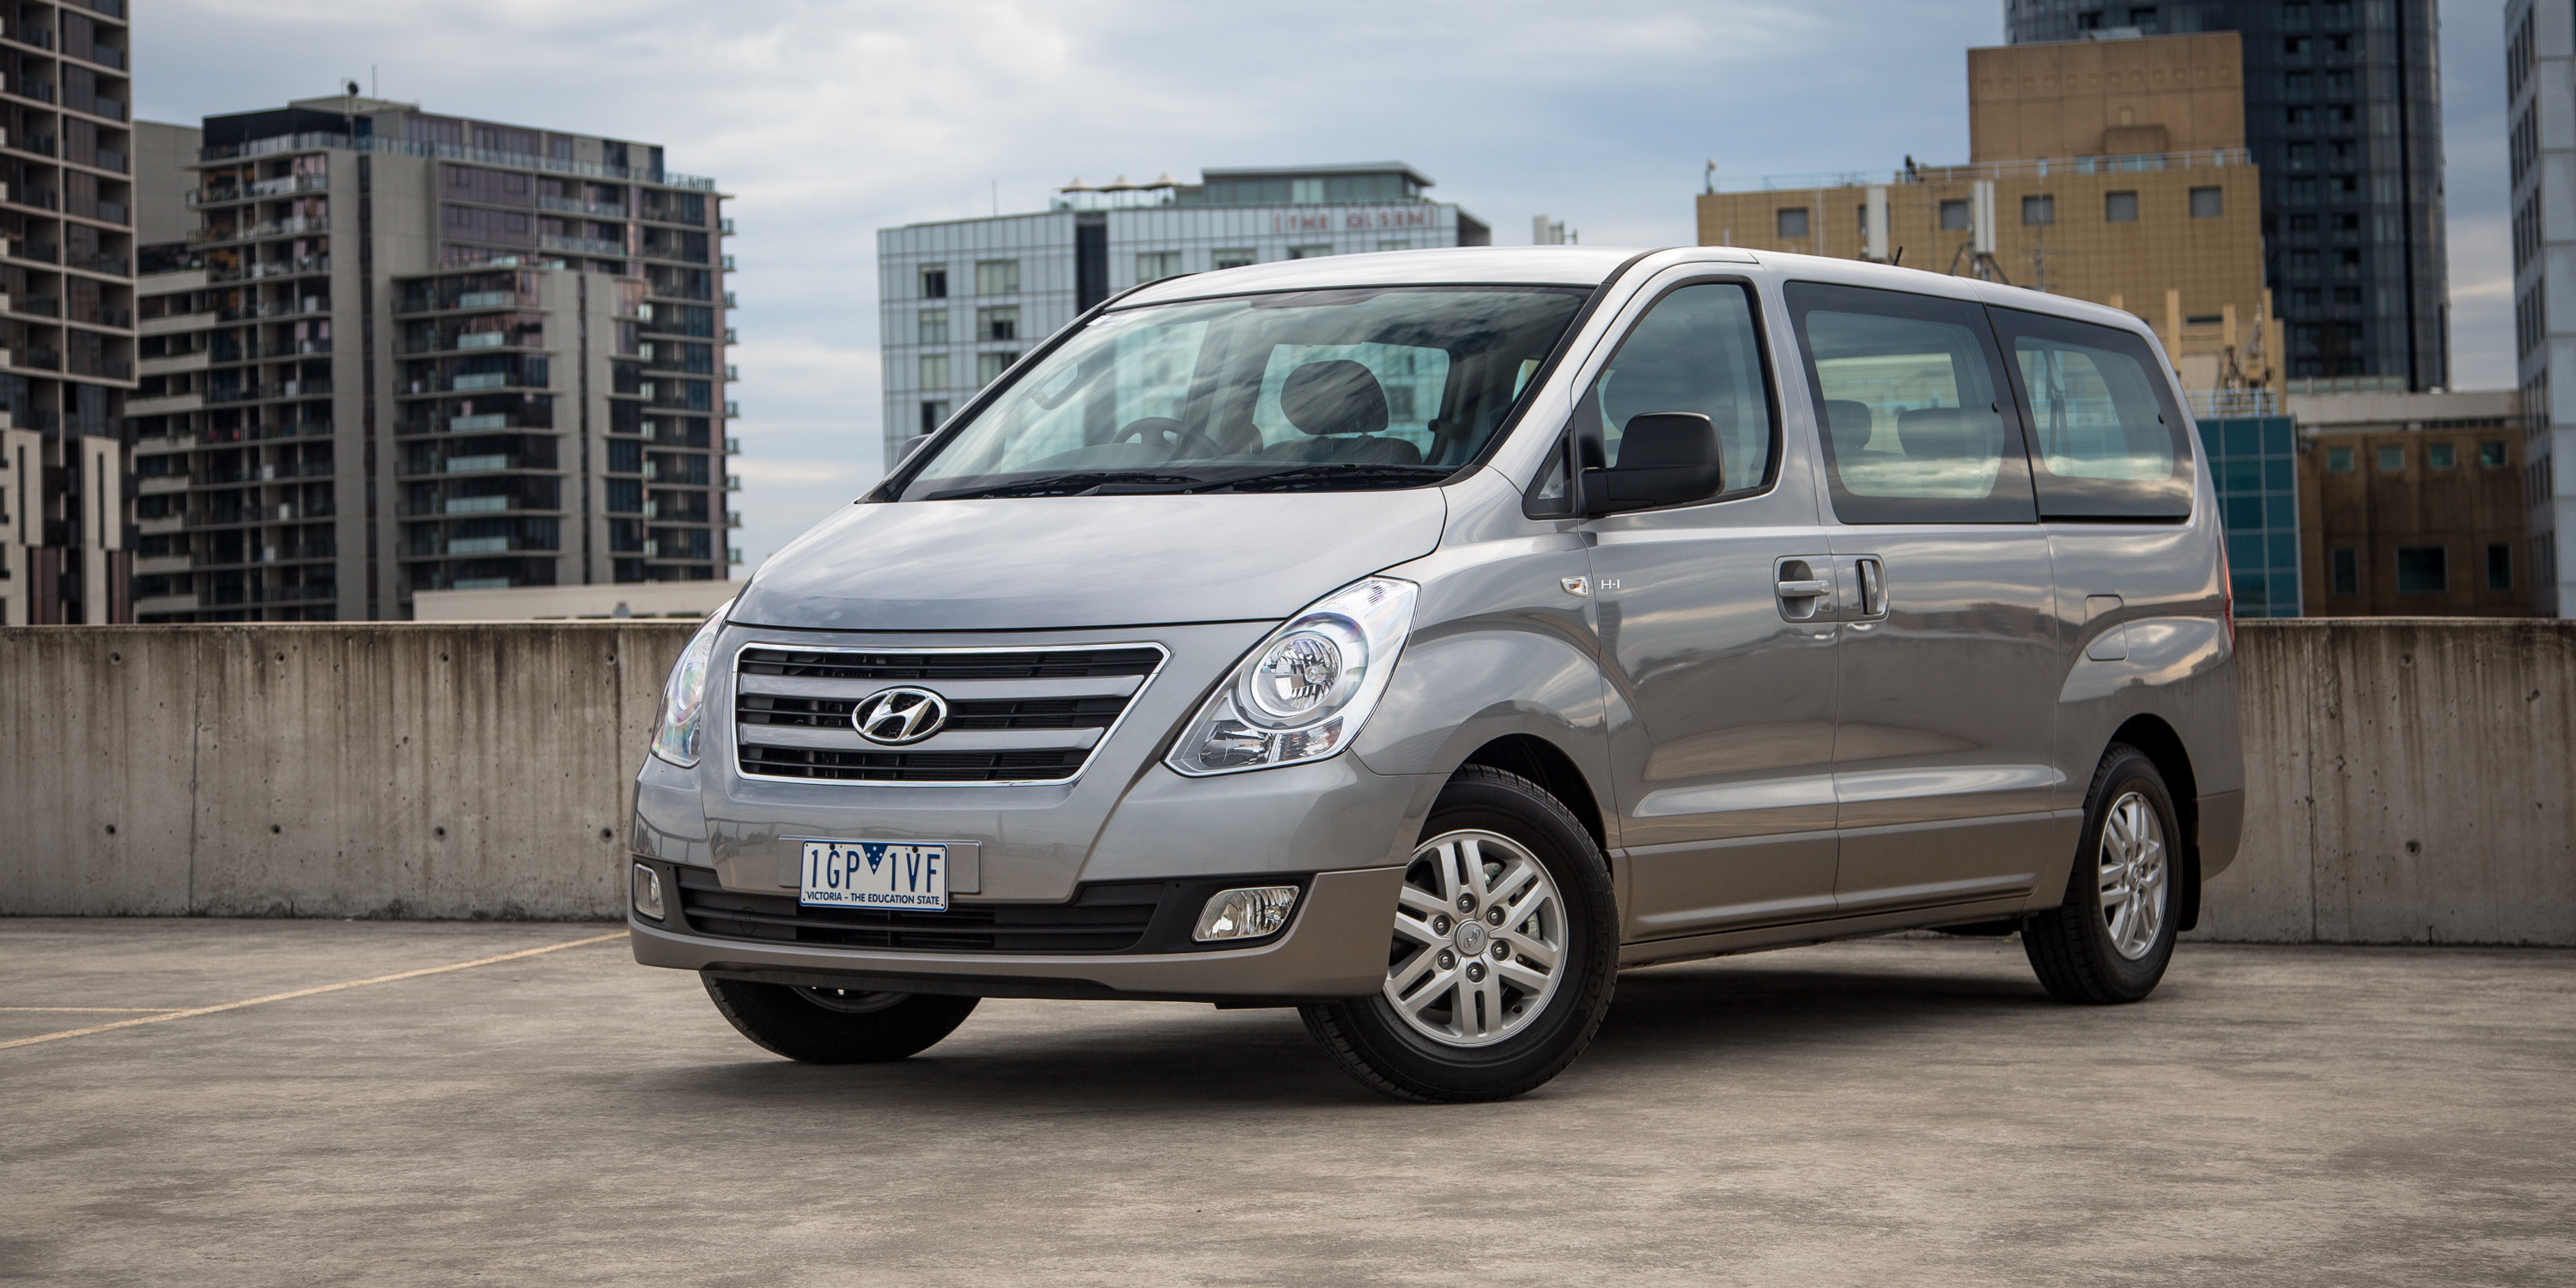 2016 Hyundai iMax Review | CarAdvice